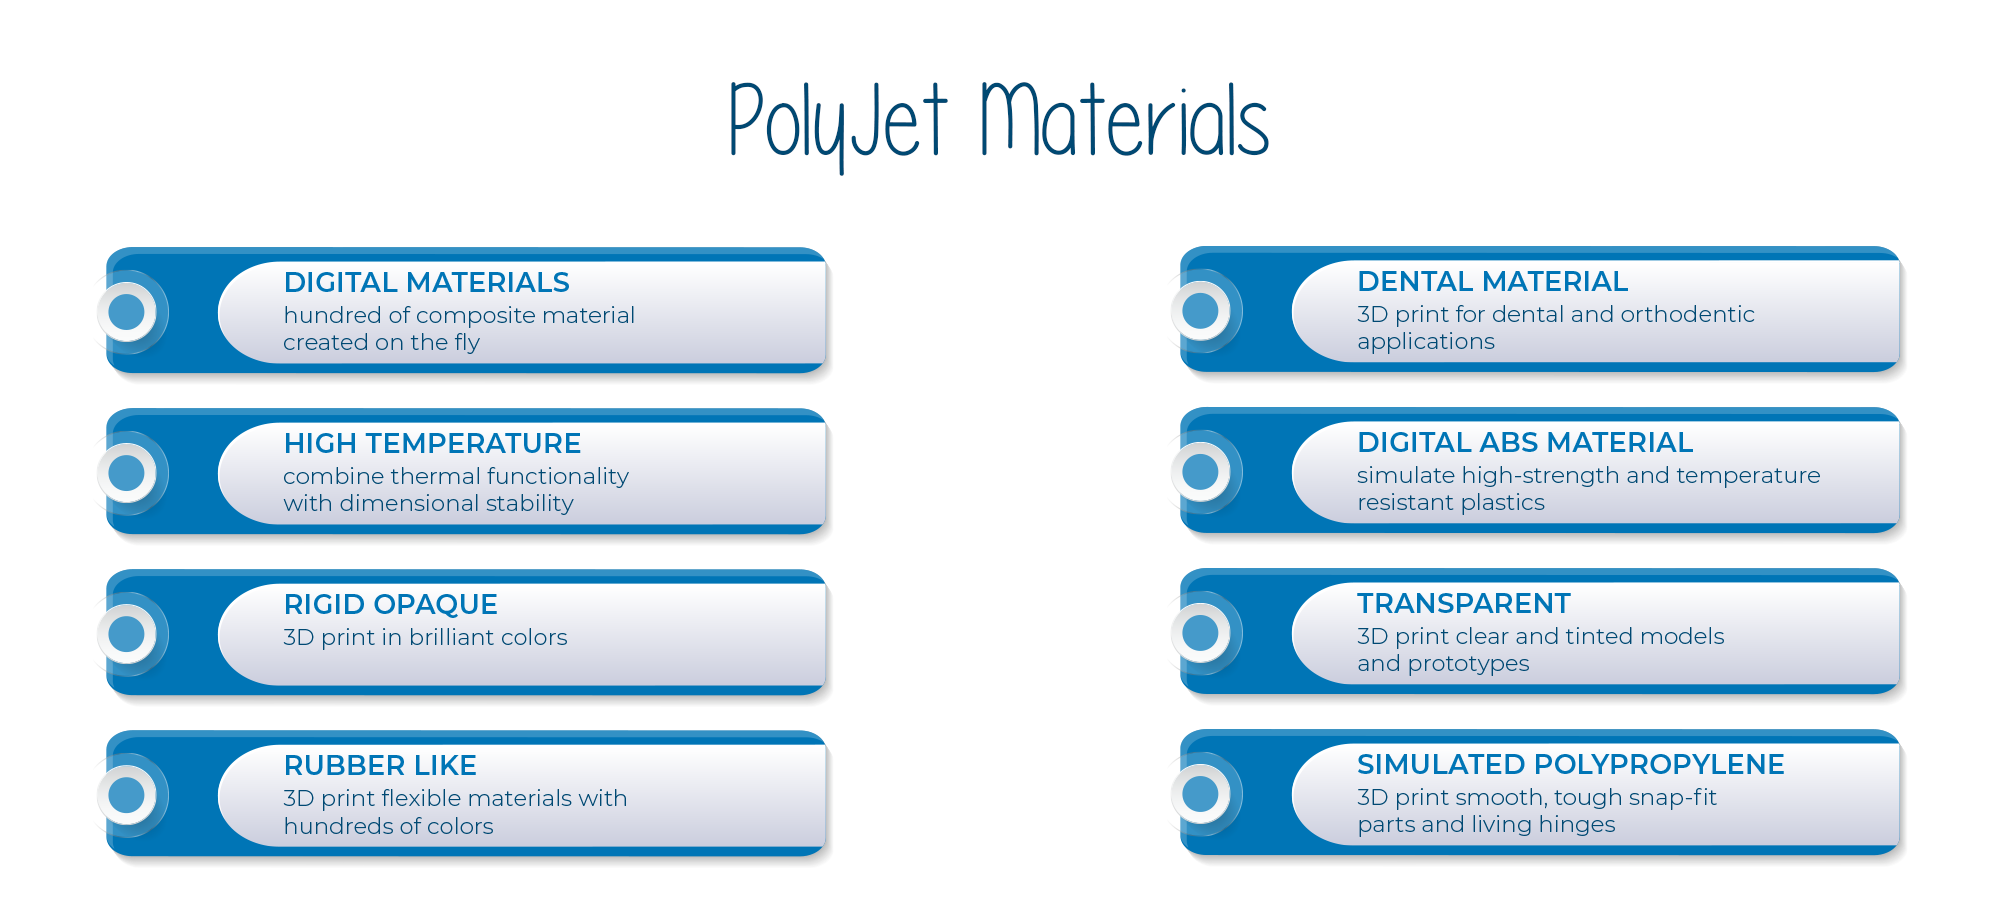 Polyjet materials